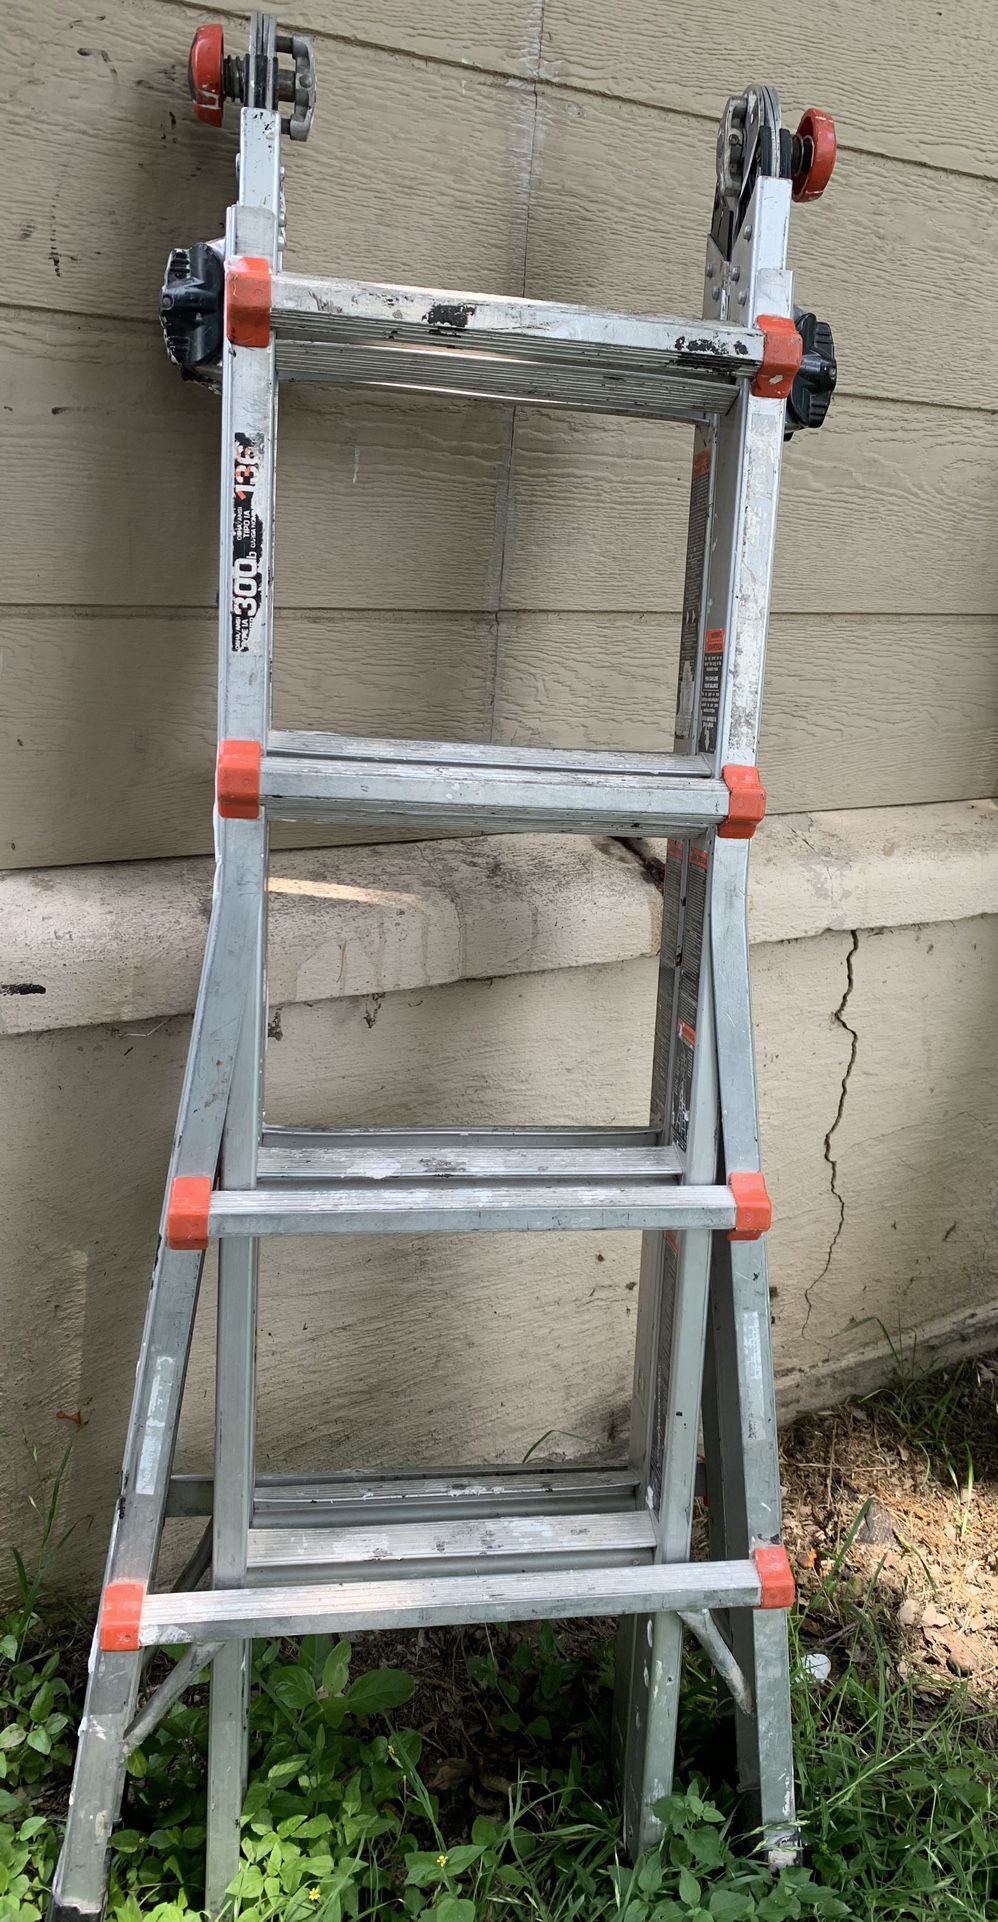 ladder 